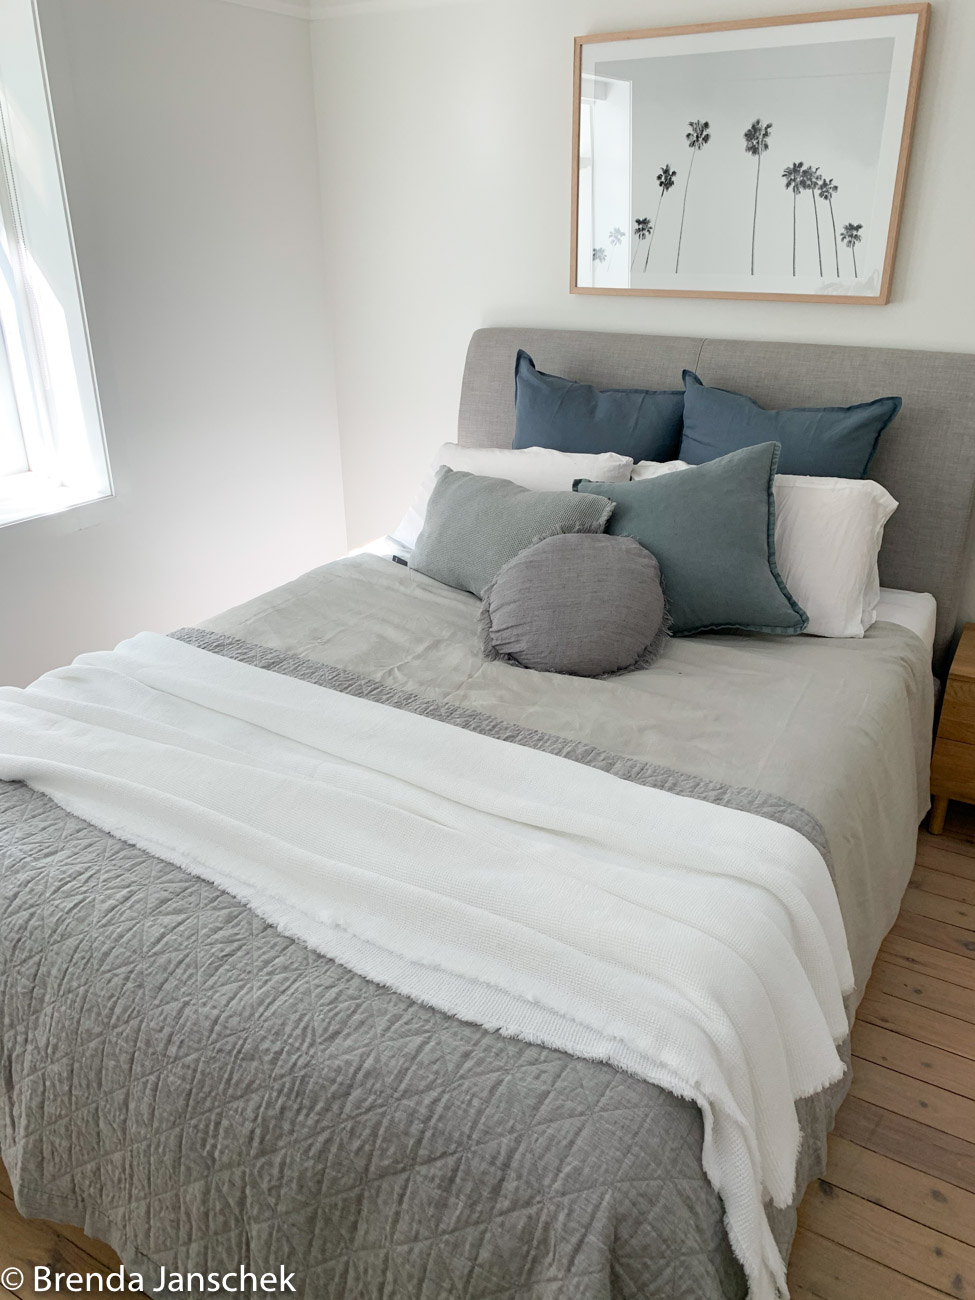 Brenda Janschek Orlando Bedroom Calm Peaceful Home Feature